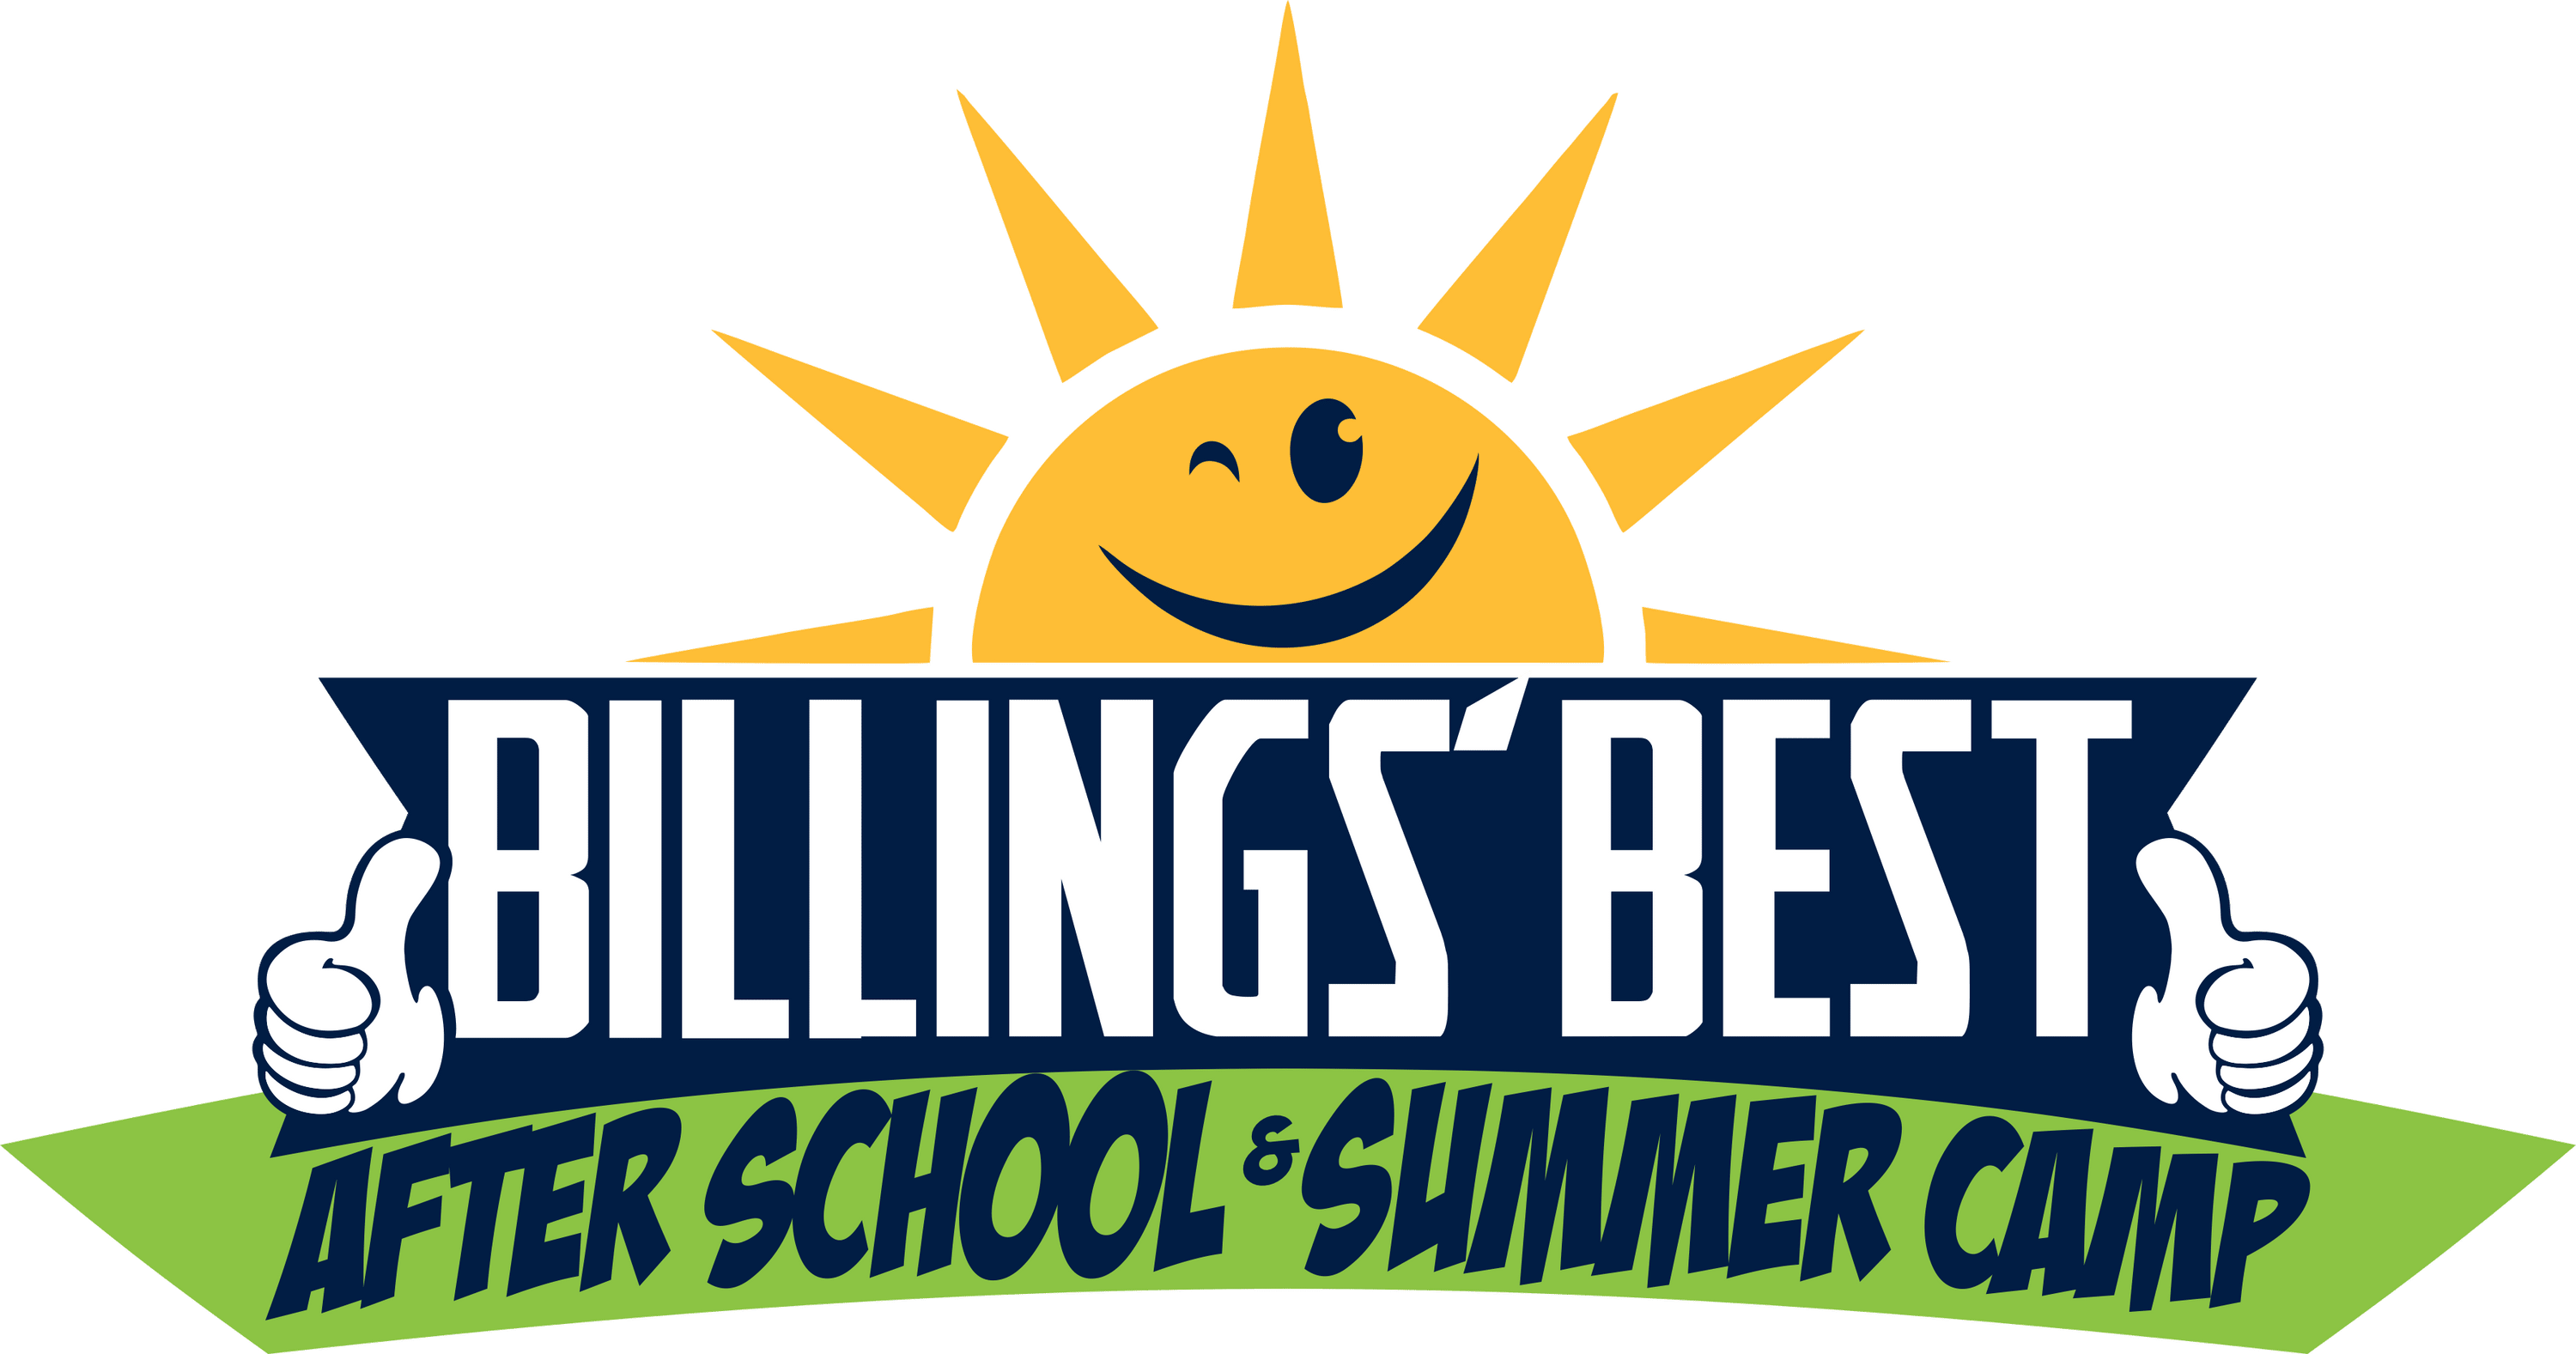 Billings' Best After School & Summer Camp